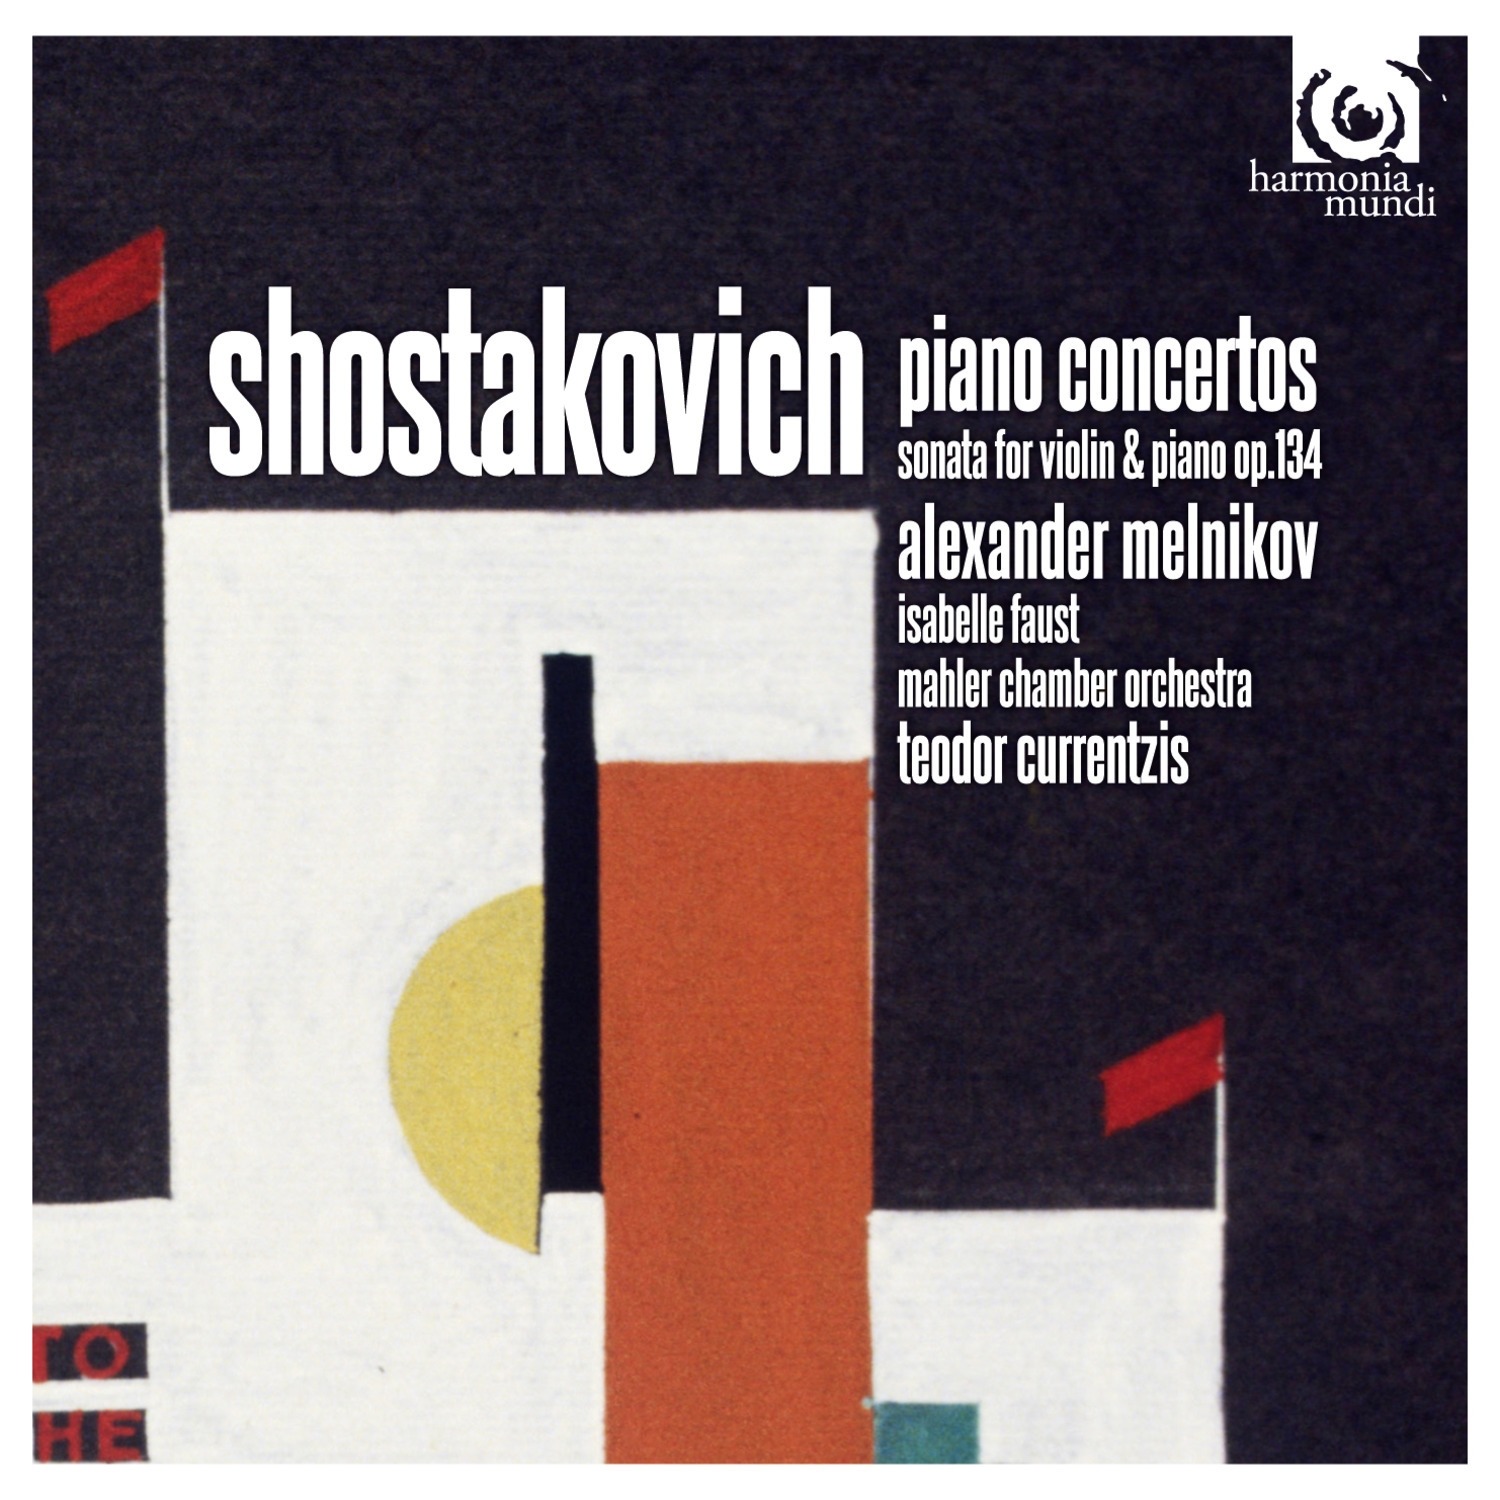 Mahler chamber orchestra. Shostakovich Piano Concerto no. 2. Shostakovich & Schnittke: Piano Concertos. Shostakovich Chamber. Shostakovich Piano Concerto no. 2 op. 102 In f Major Andante.